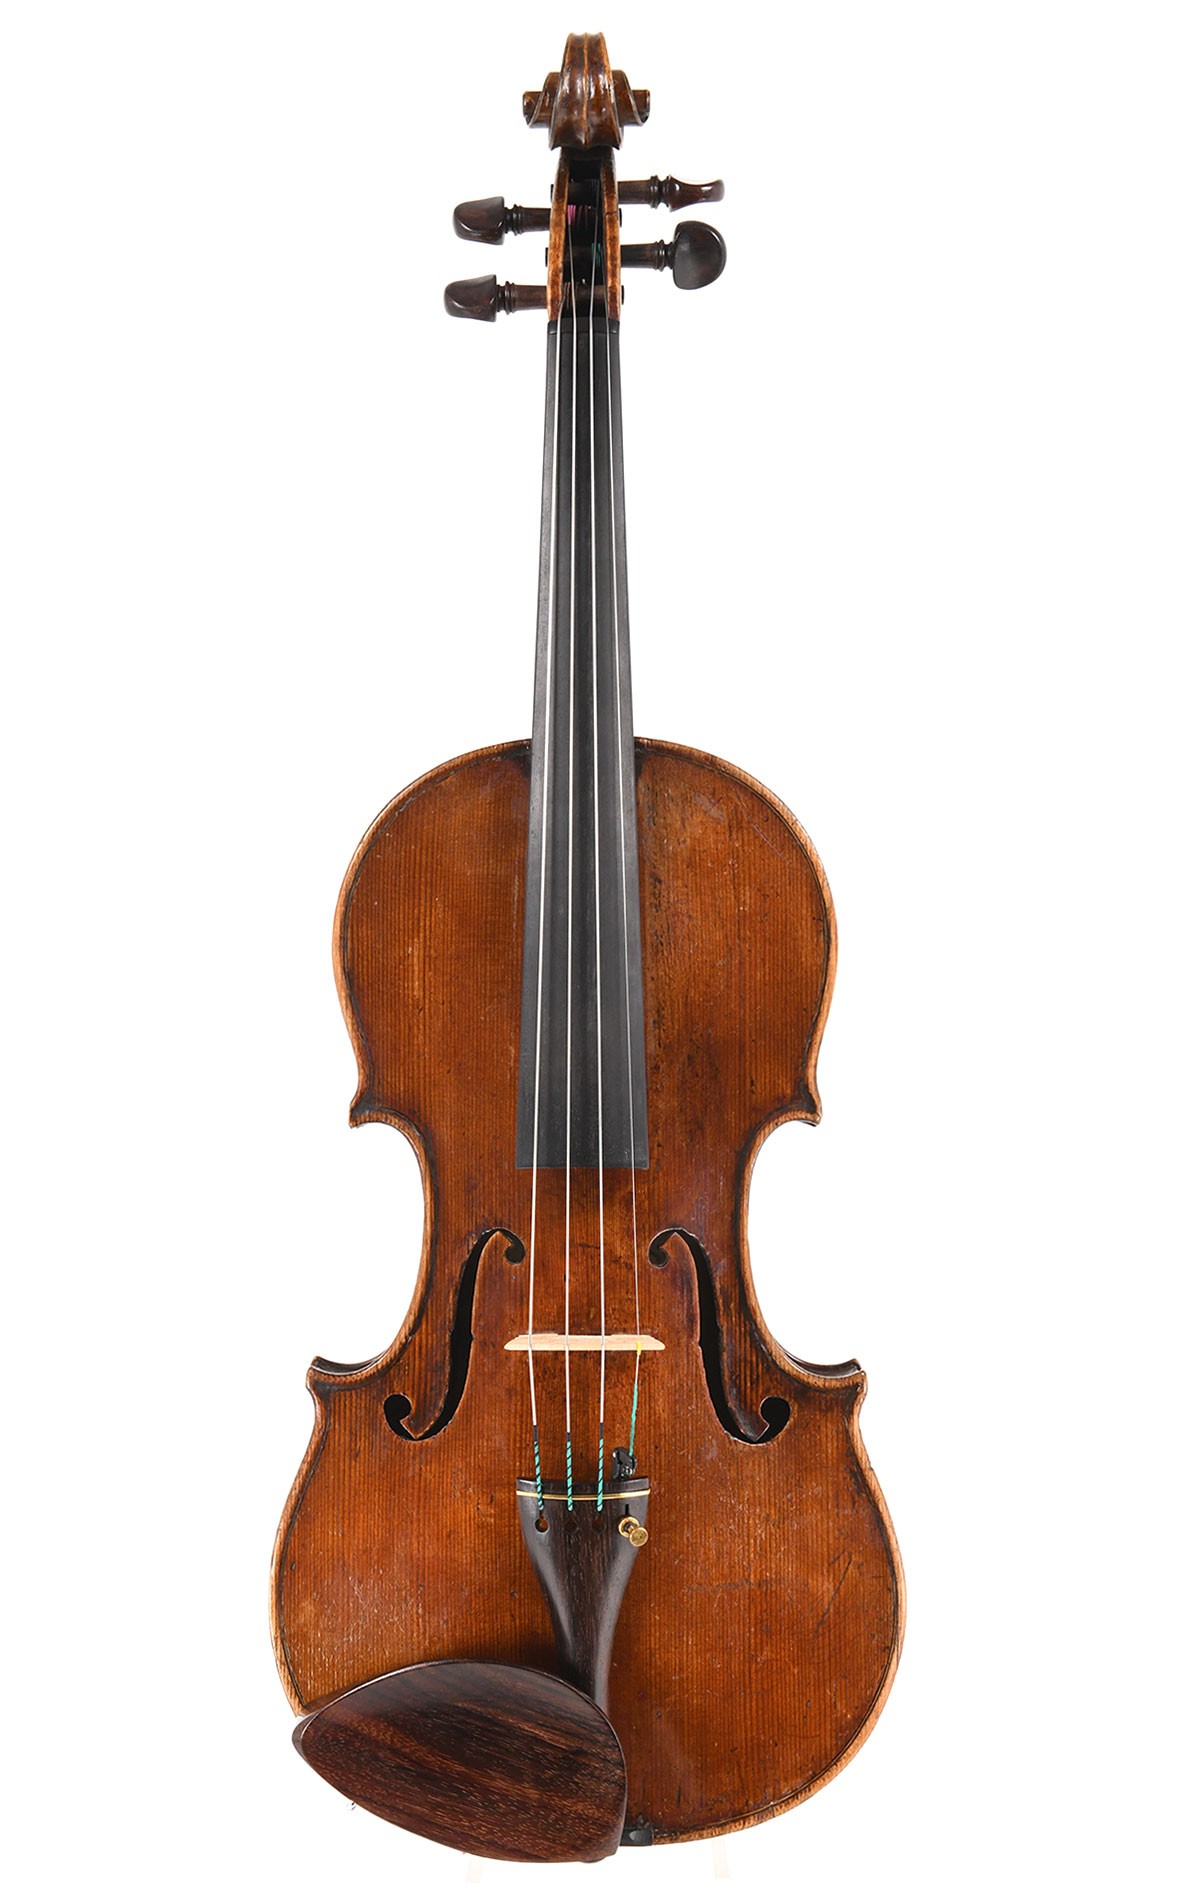 Paul Bailly violin